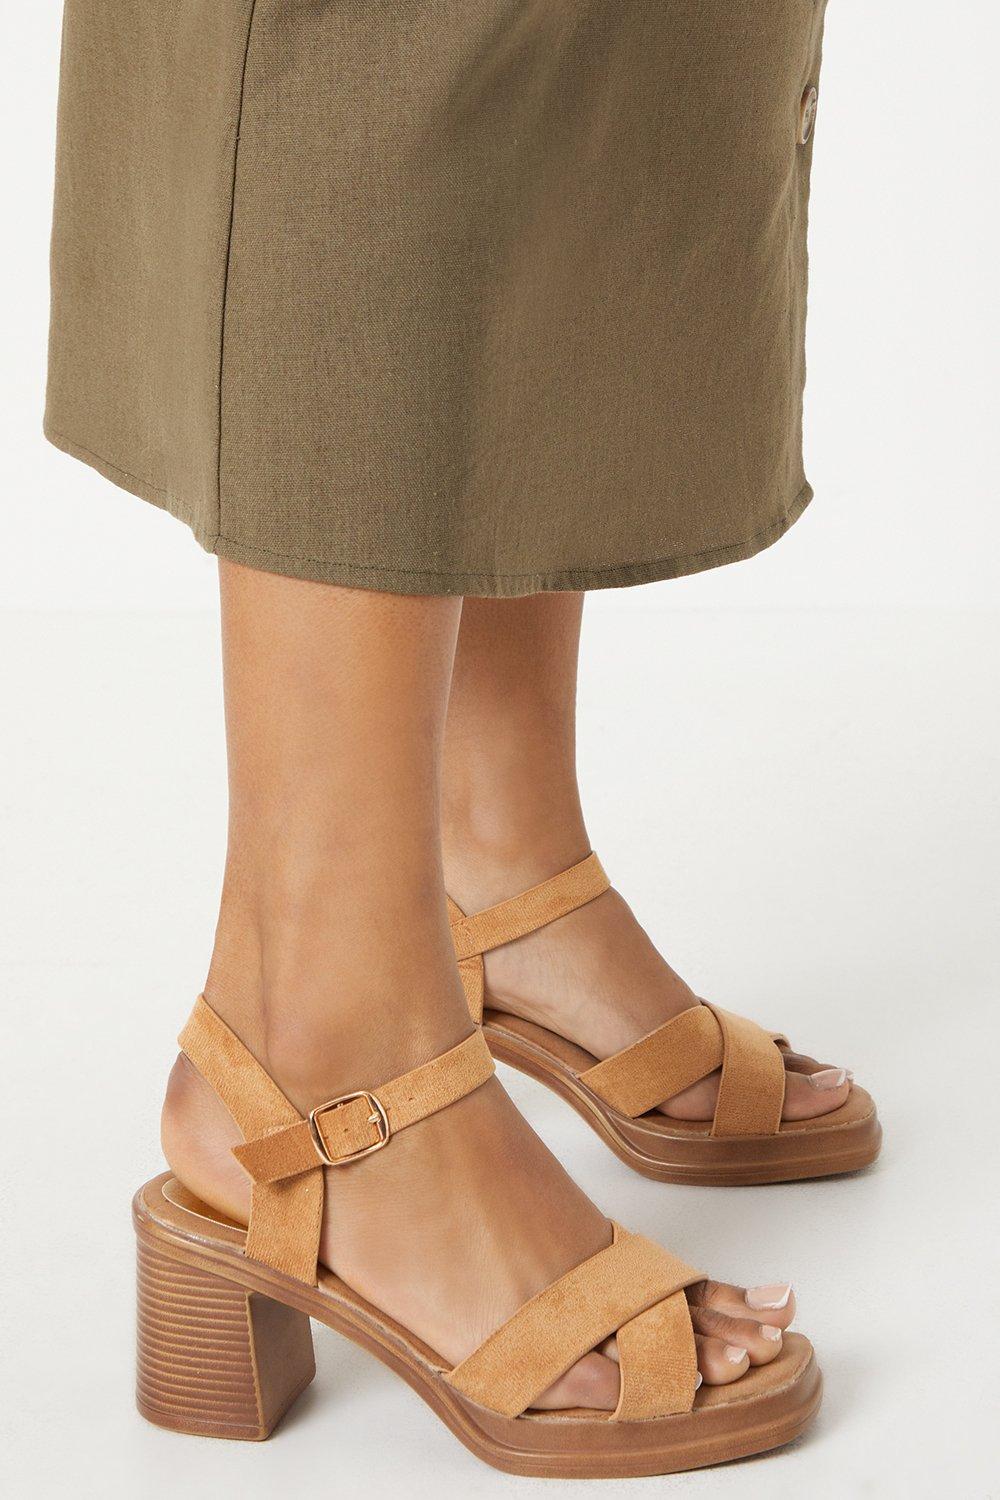 Womens Courtney Cross Strap Comfort High Heel Platform Sandals